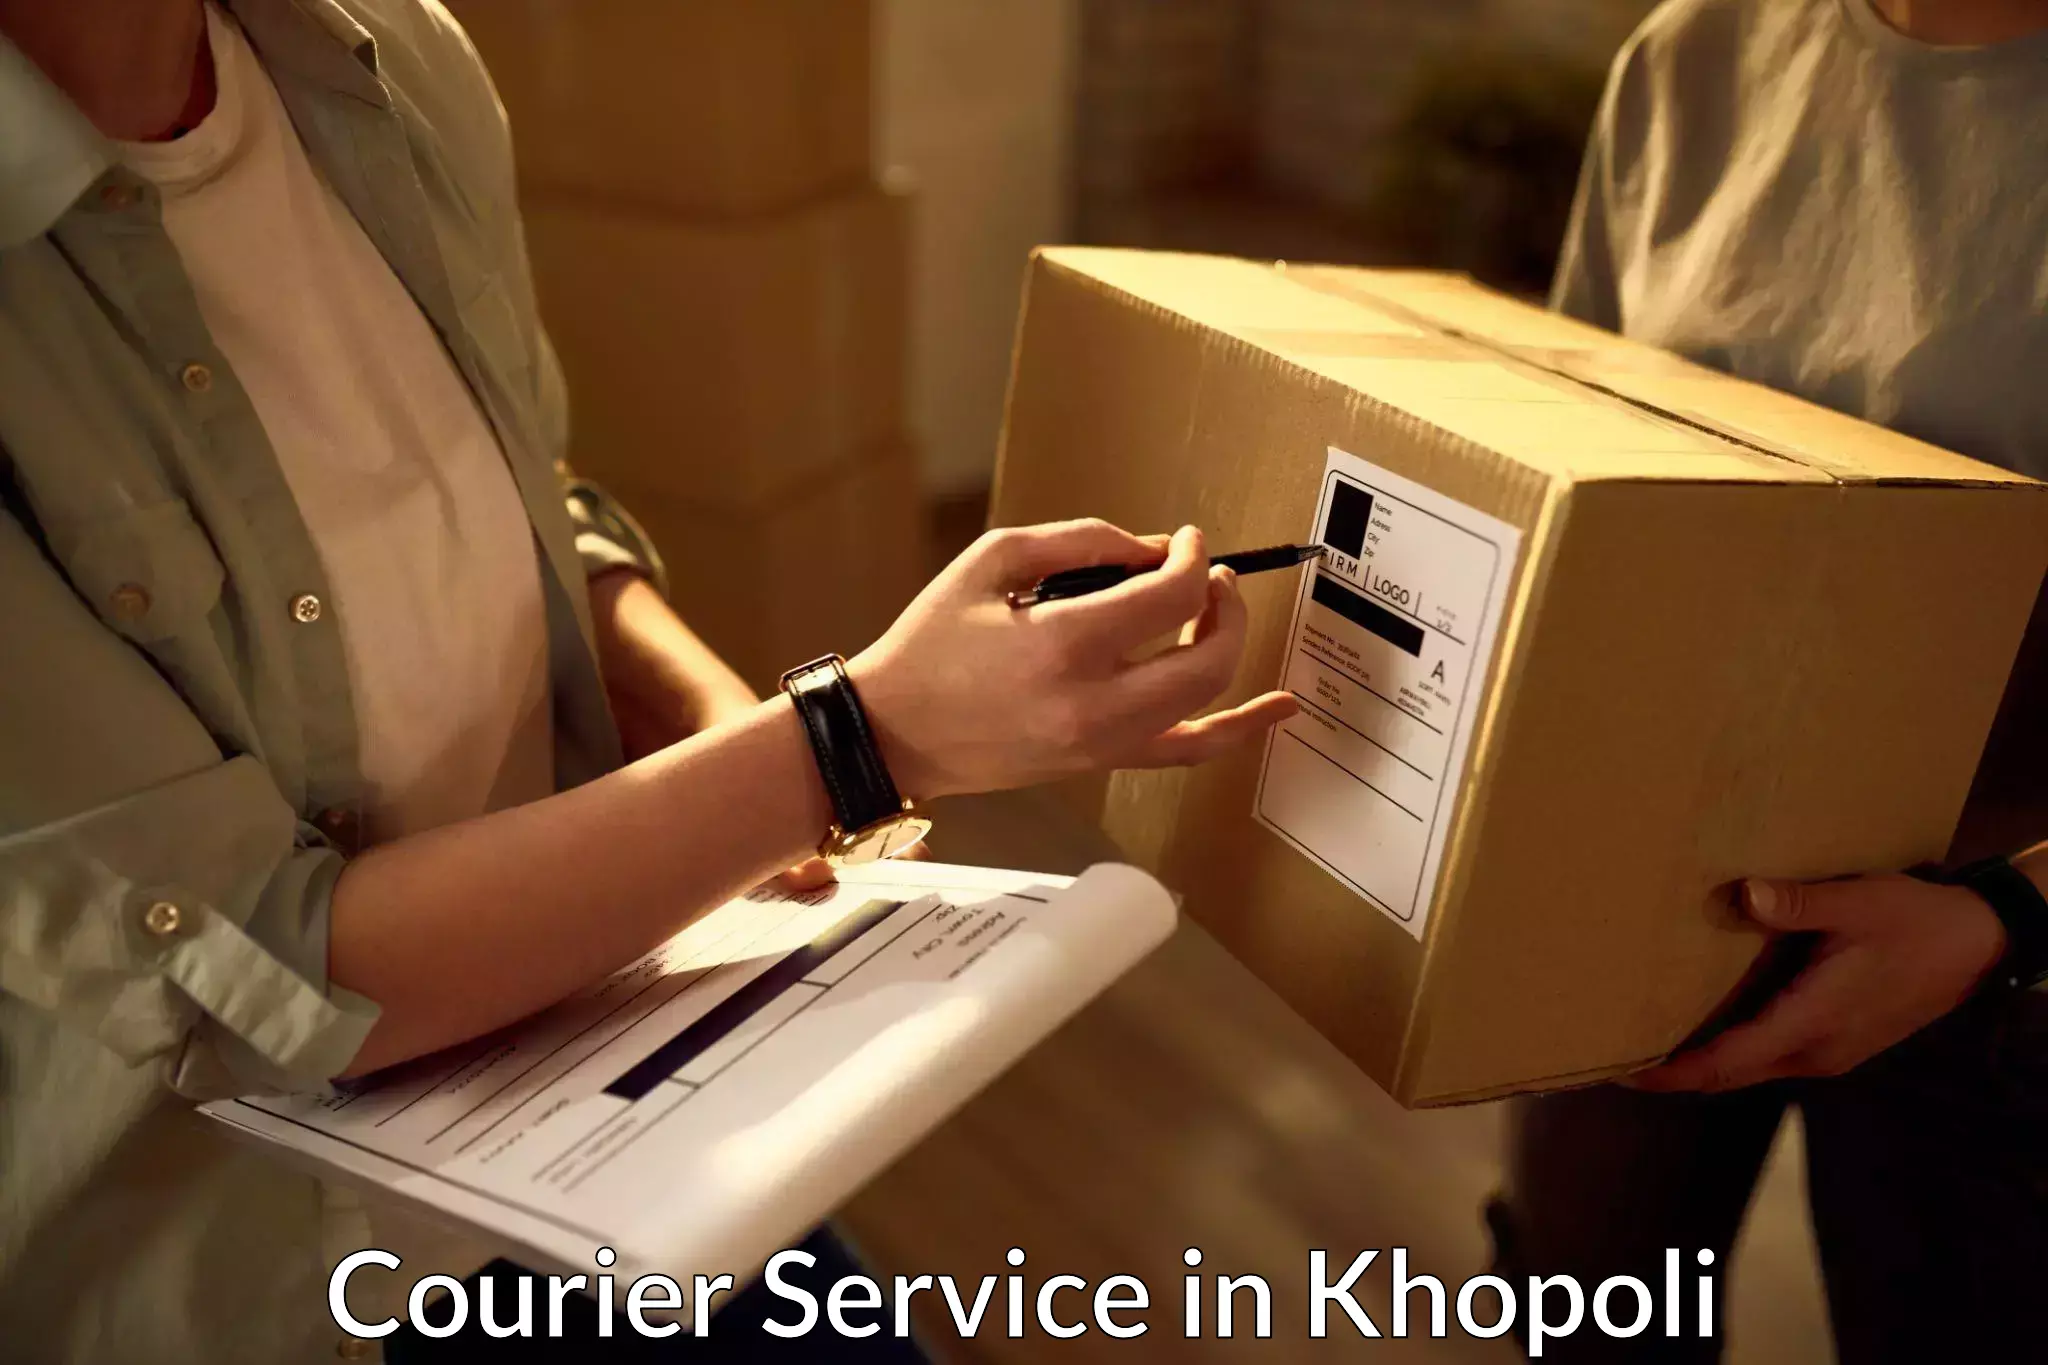 User-friendly delivery service in Khopoli